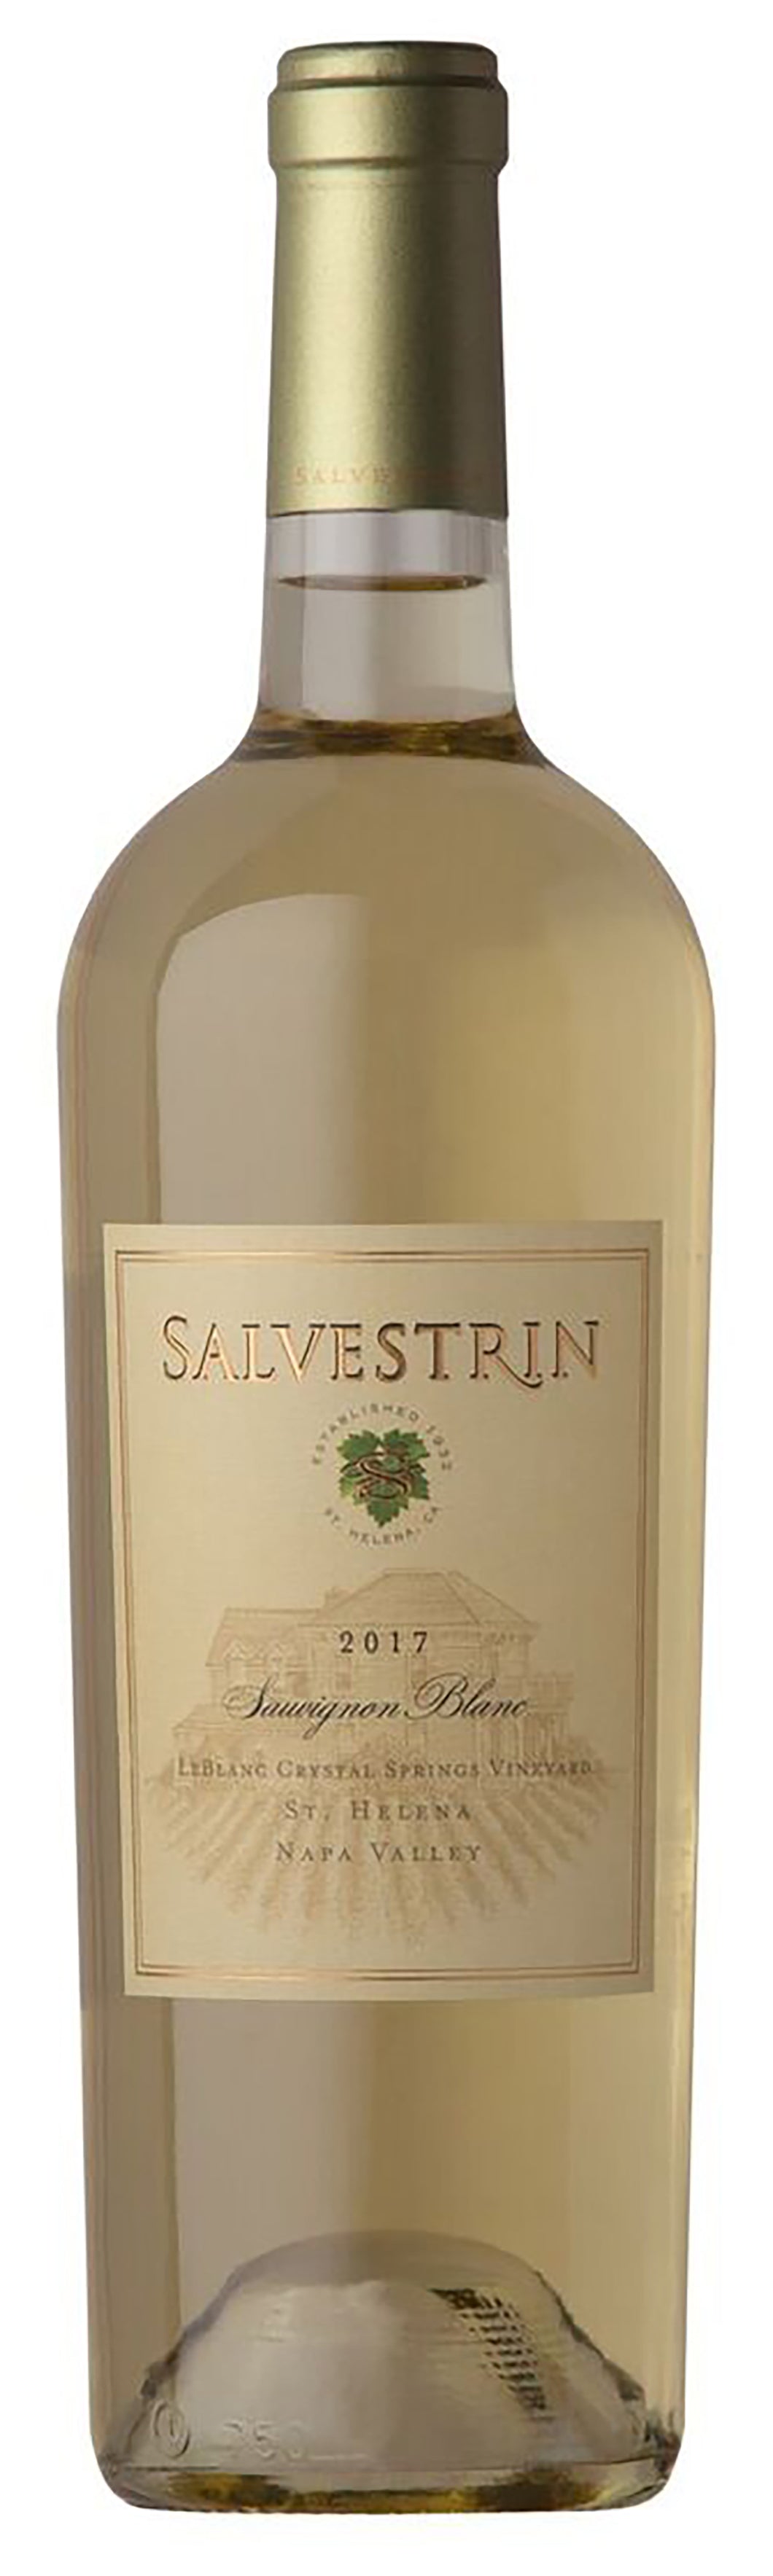 Buy Wines in Singapore - Salvestrin Sauvignon Blanc